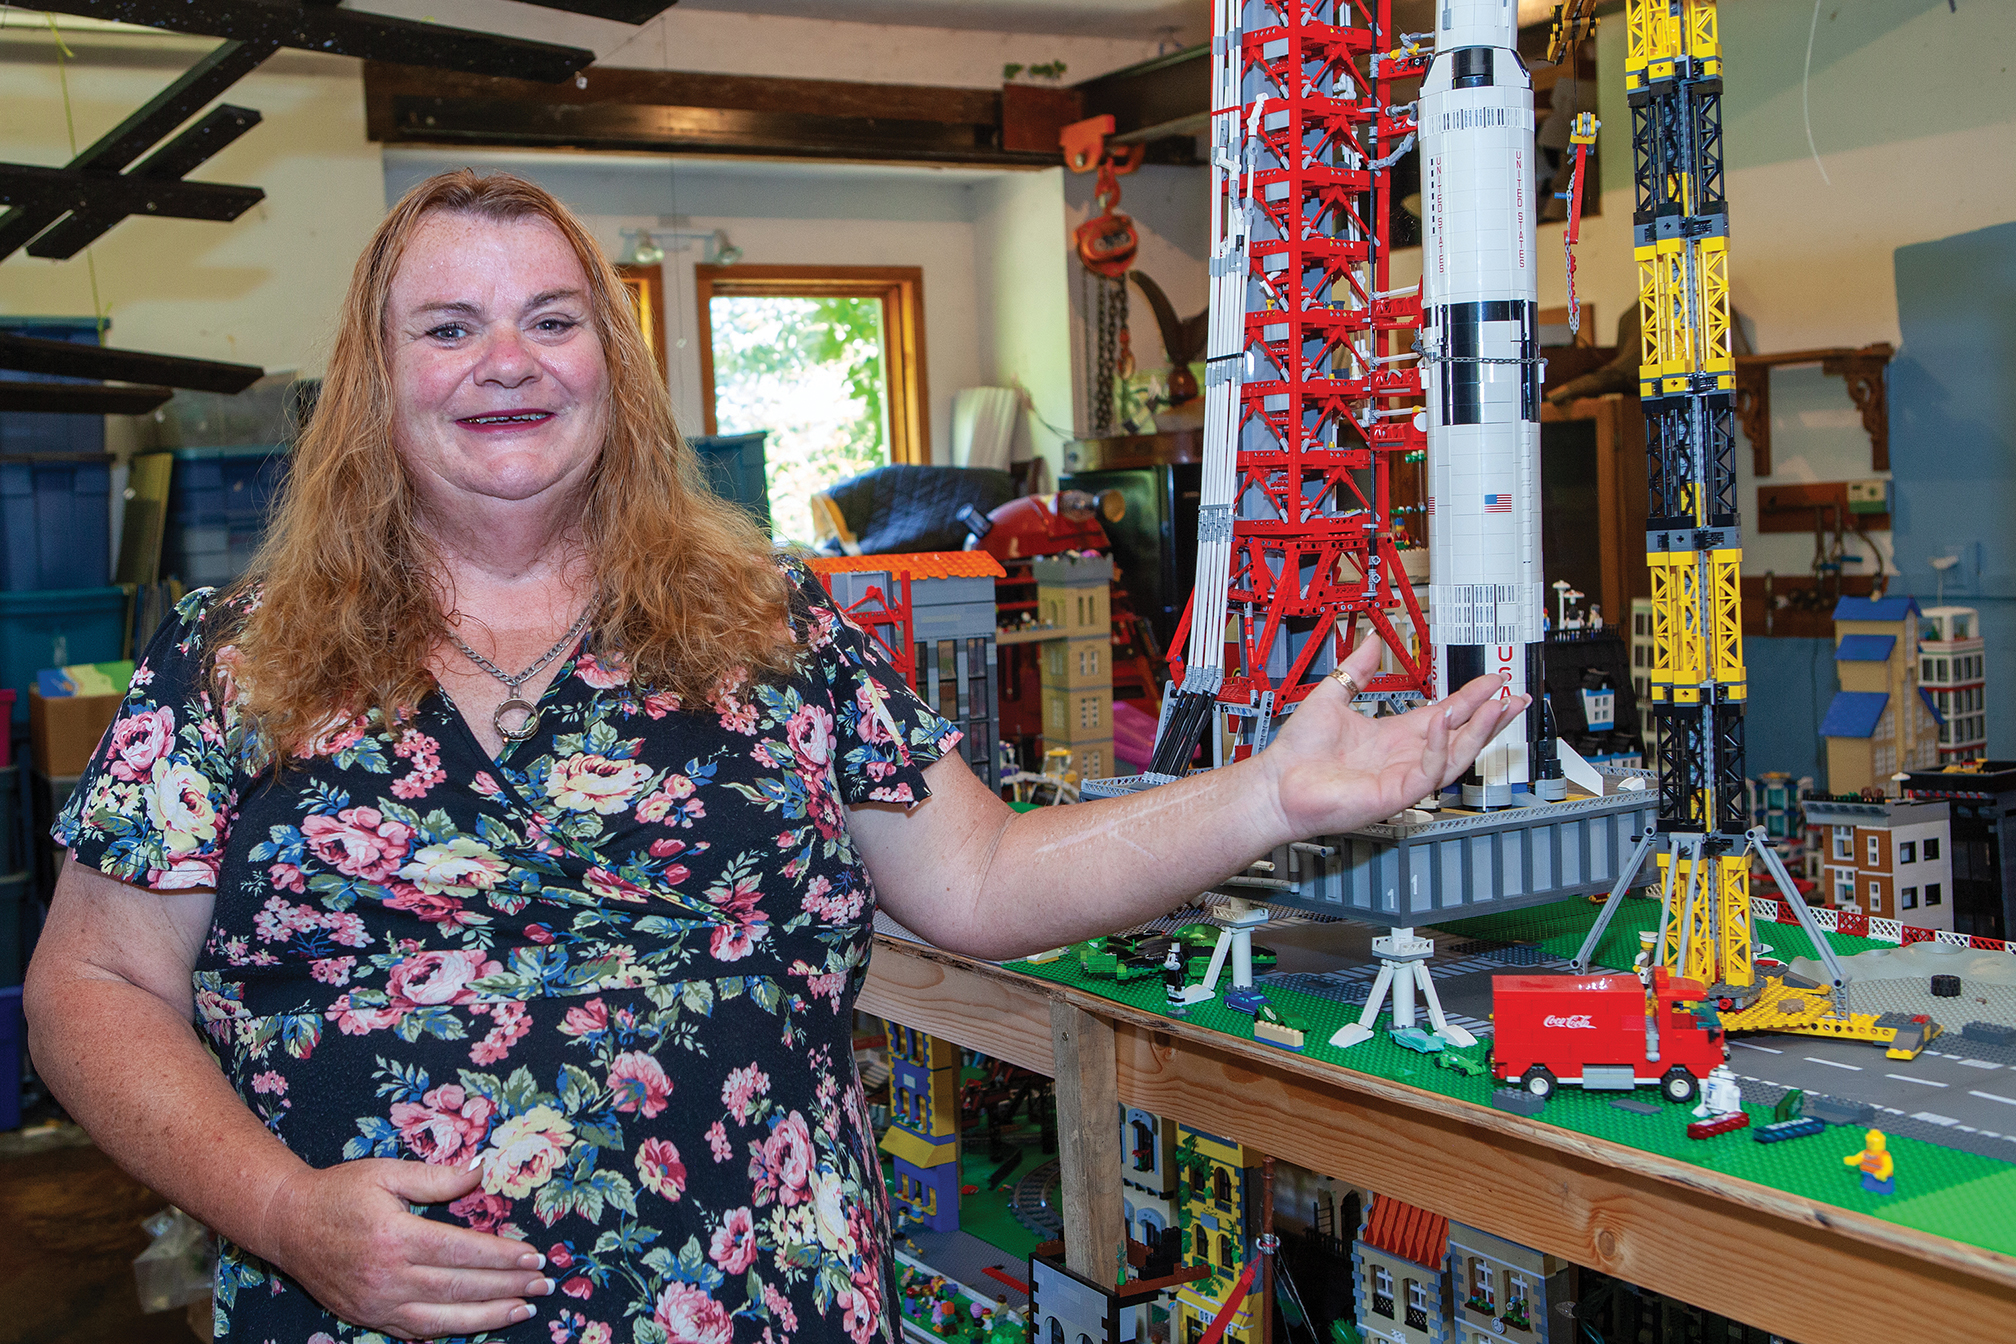 Lego city on the Sunshine Coast set for demolition - Coast Reporter